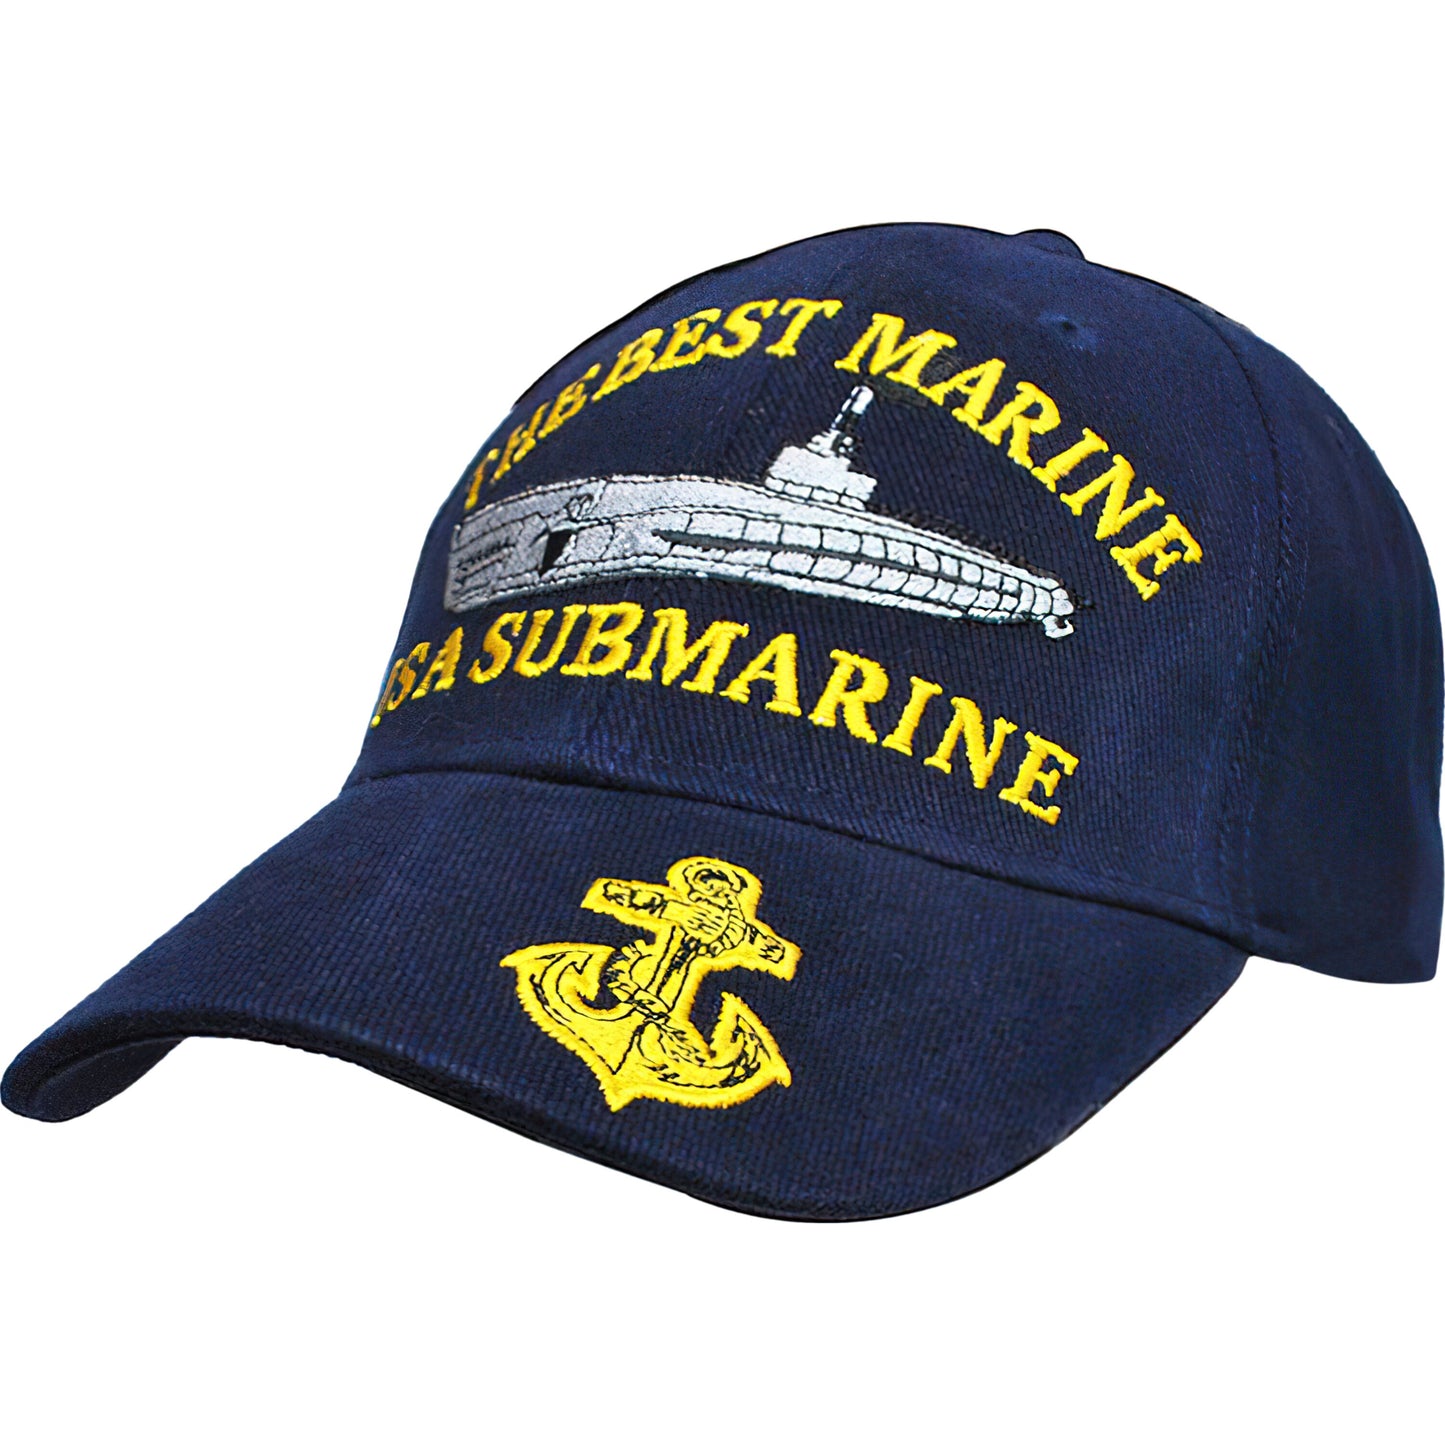 The Best Marine is A Submarine Anchor Hat Cap Blue